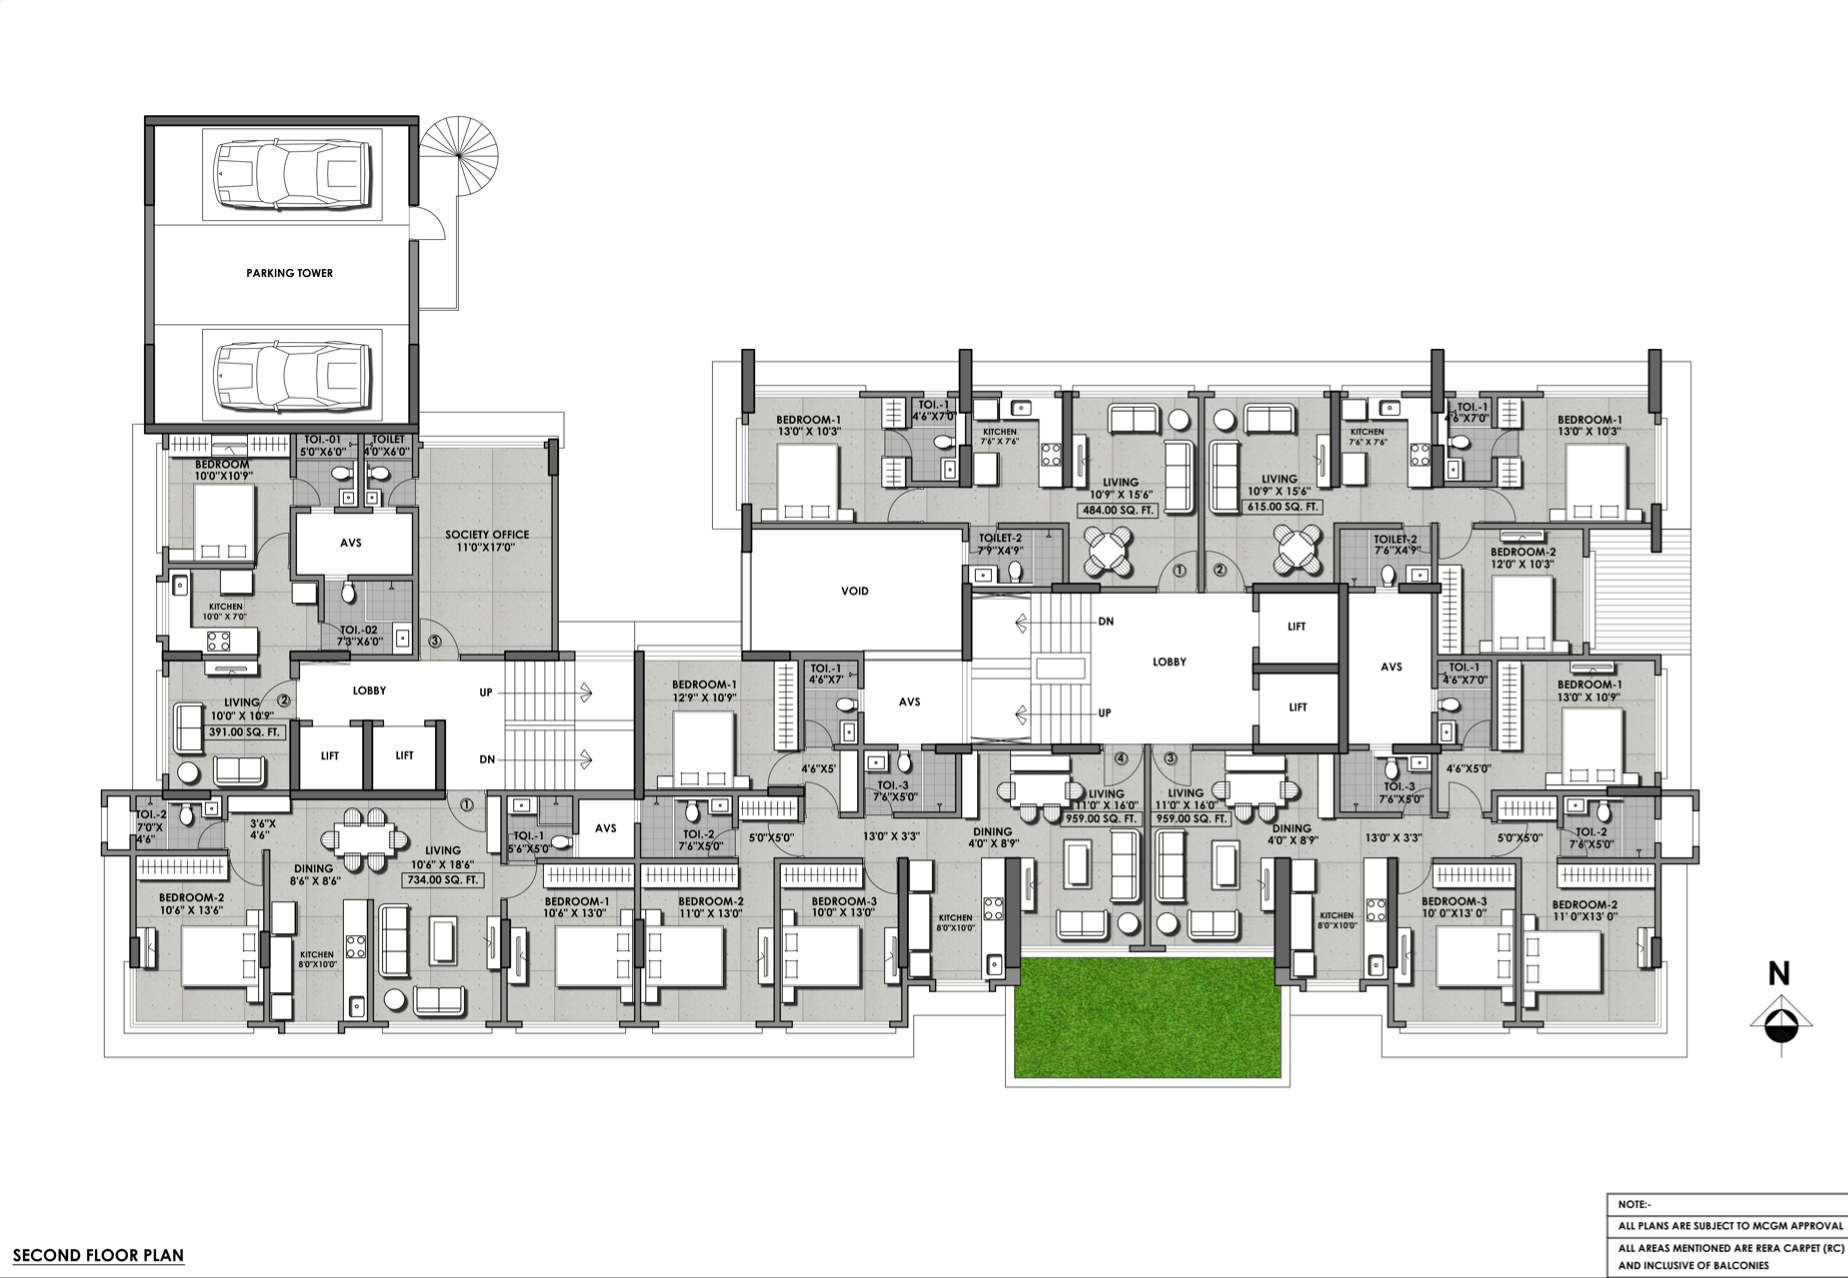 atharv laxmi floor plan 2 Layout Image